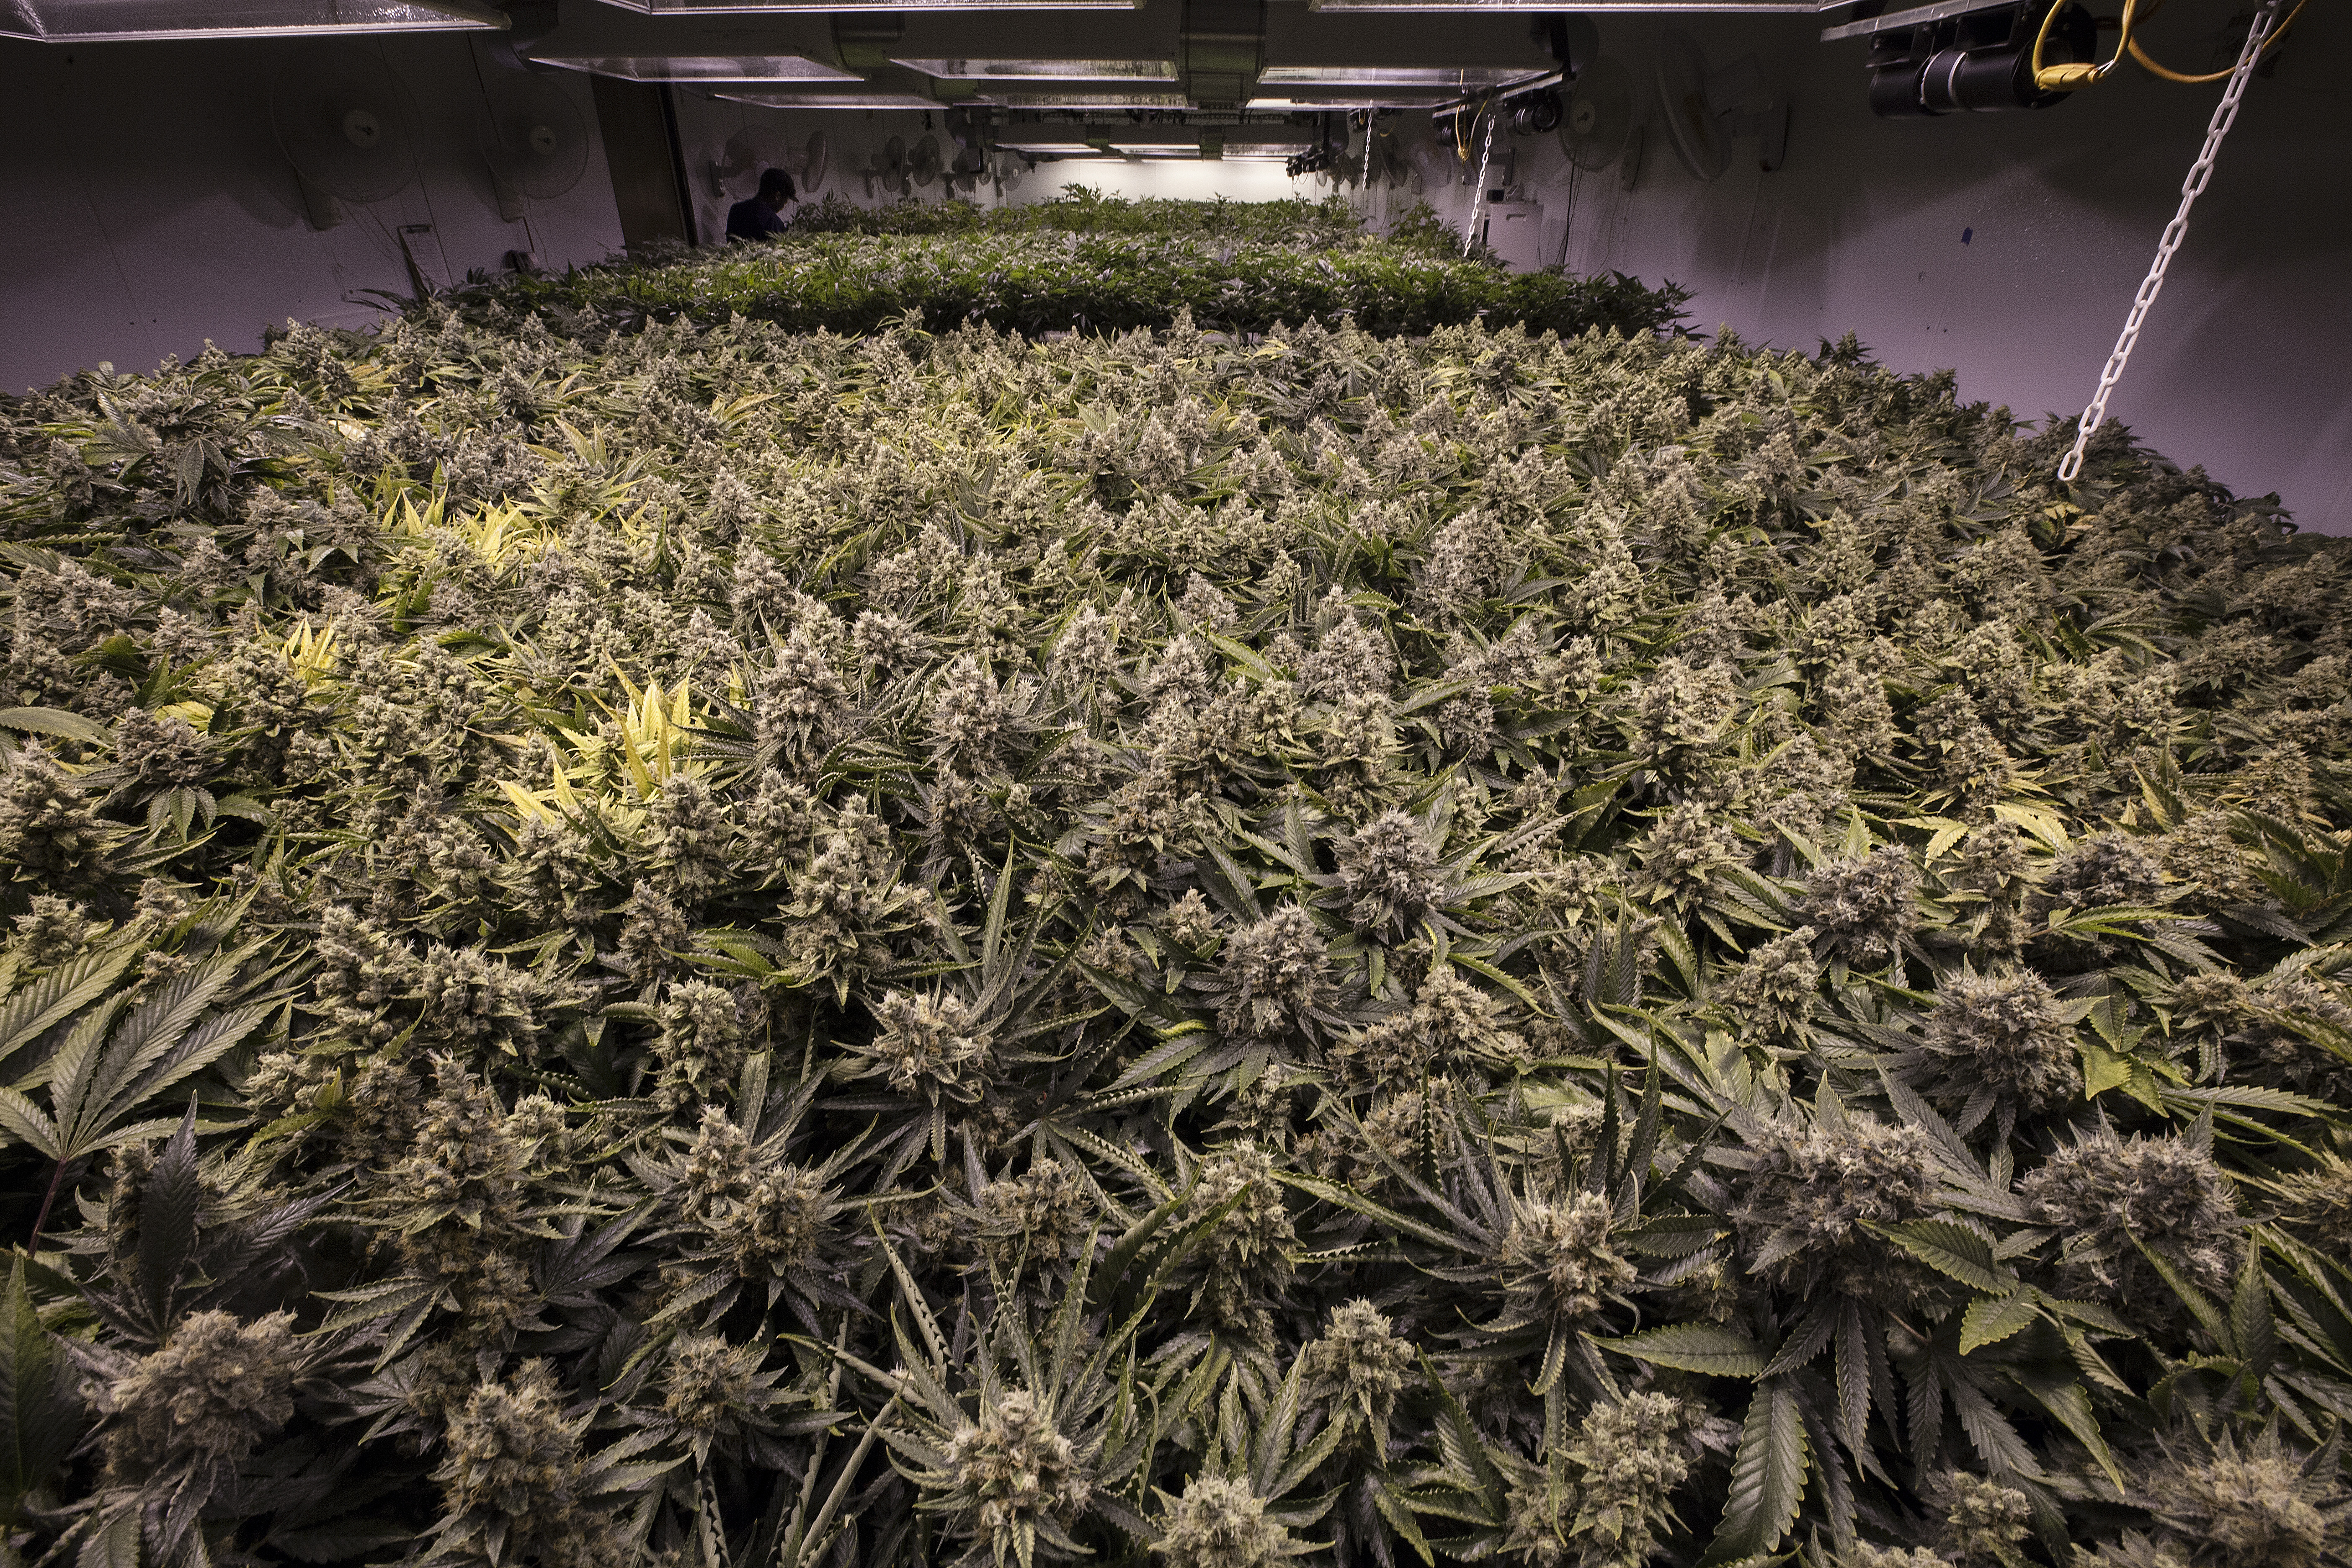 Oregon Indoor Marijuana Grow Operation Photo by Shutterstock